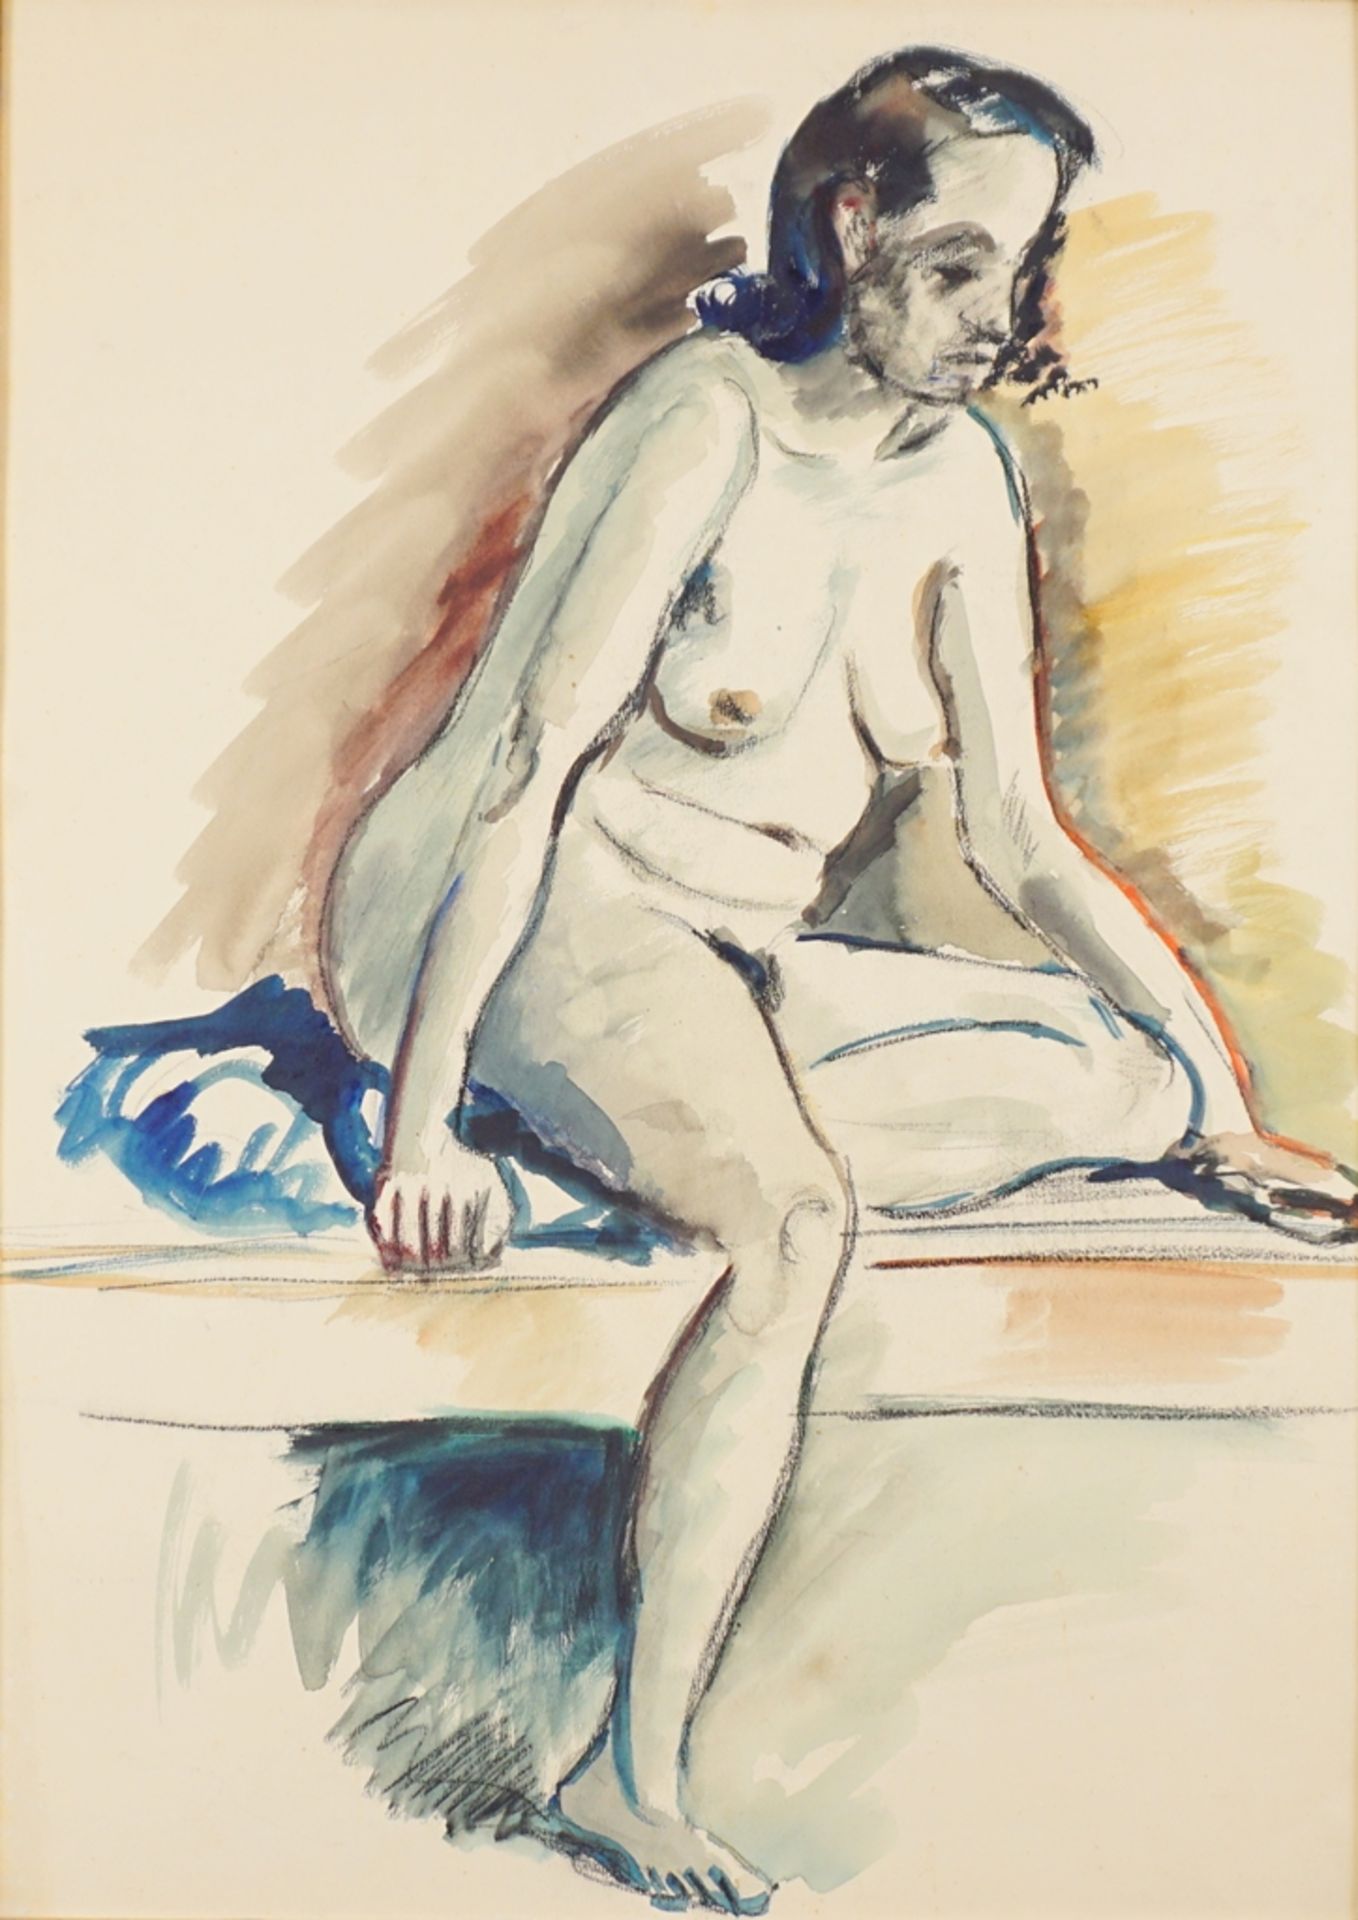 Paula Theeck (1907, Hamburg - nach 1936 verschollen), "Weiblicher Akt", Aquarell/Papier